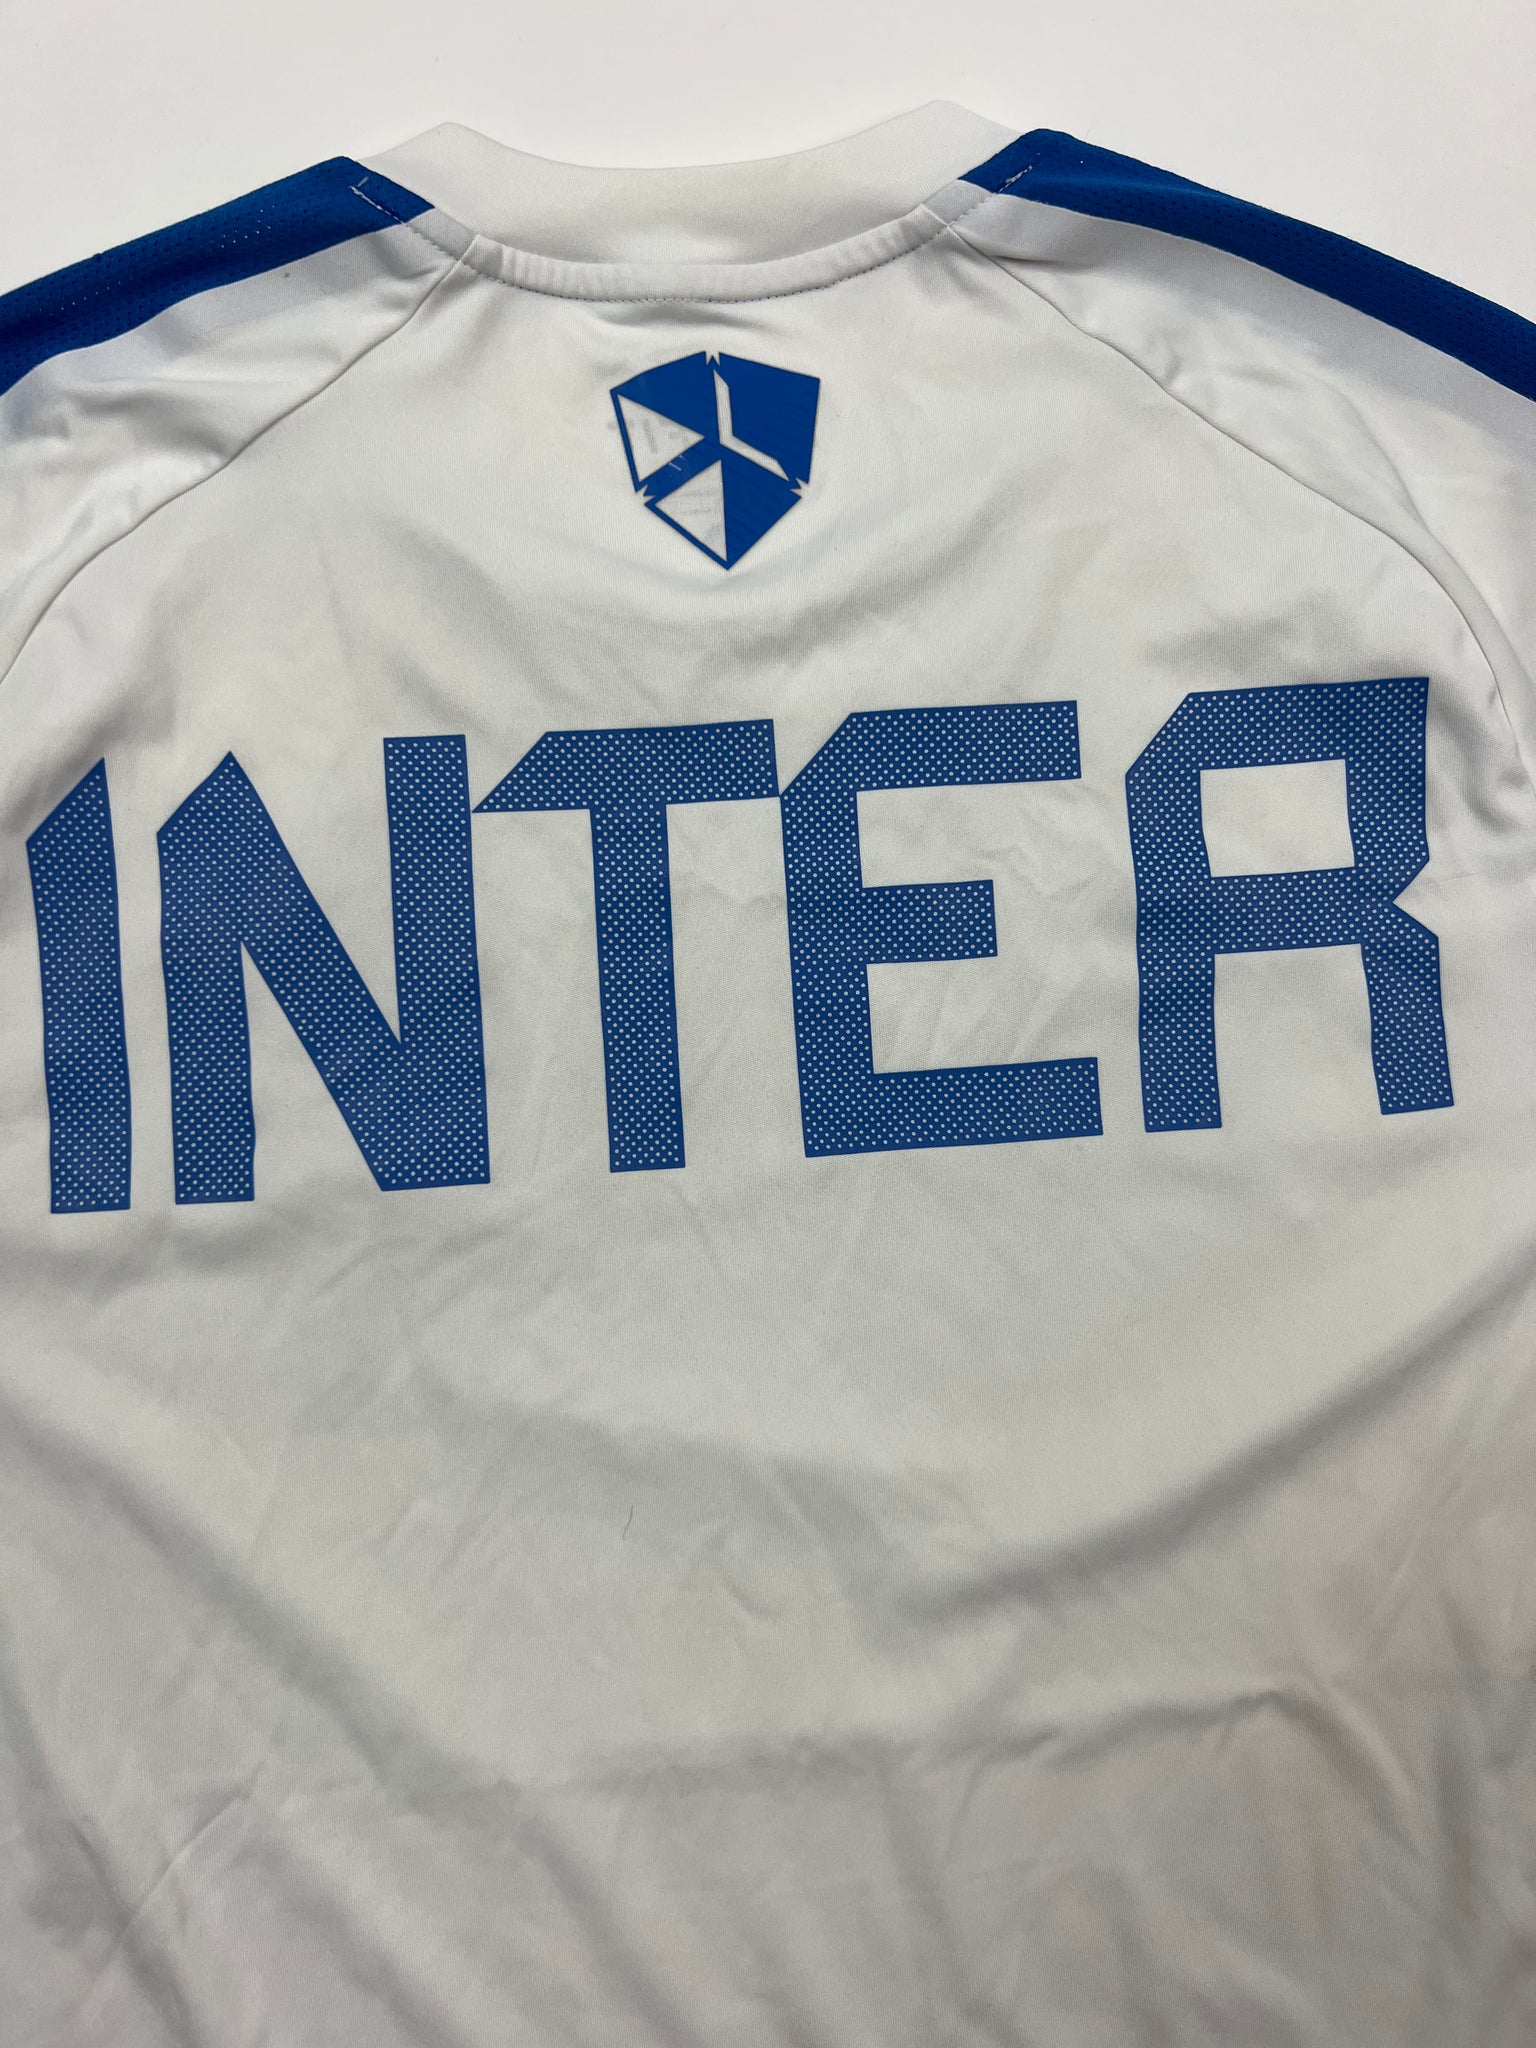 Nike Inter Milano Jersey (S)